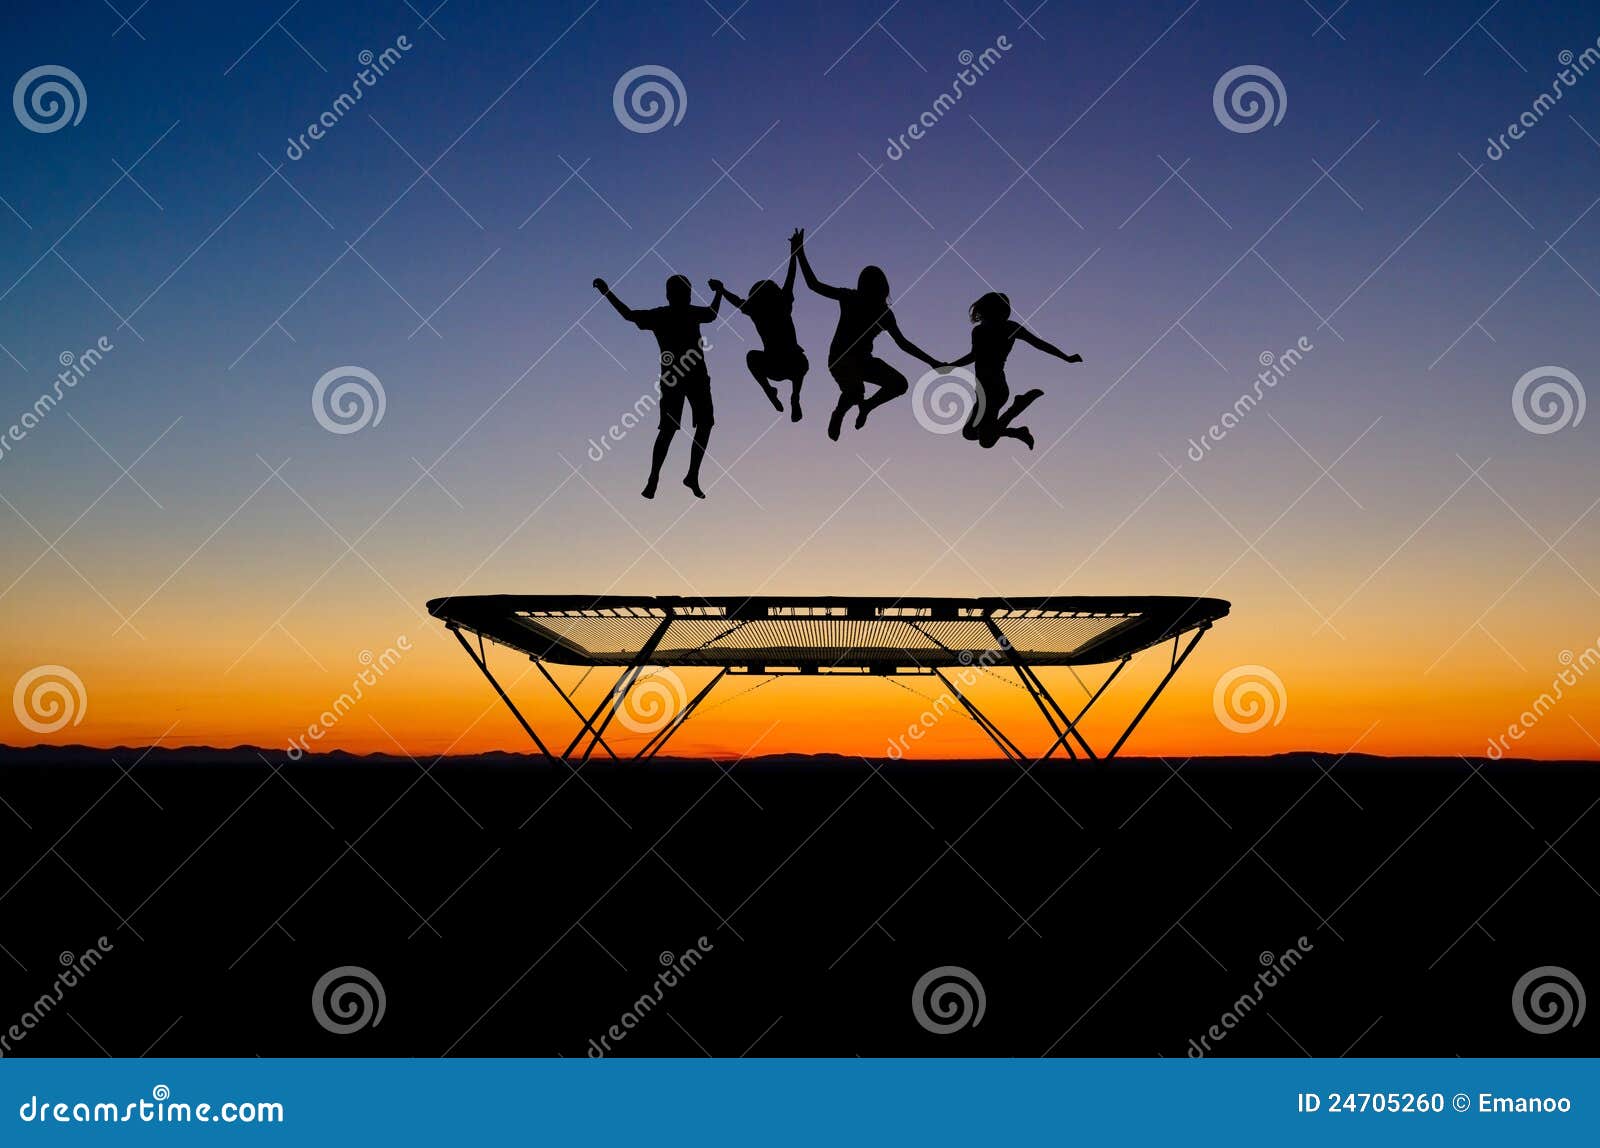 sunset kids on trampoline